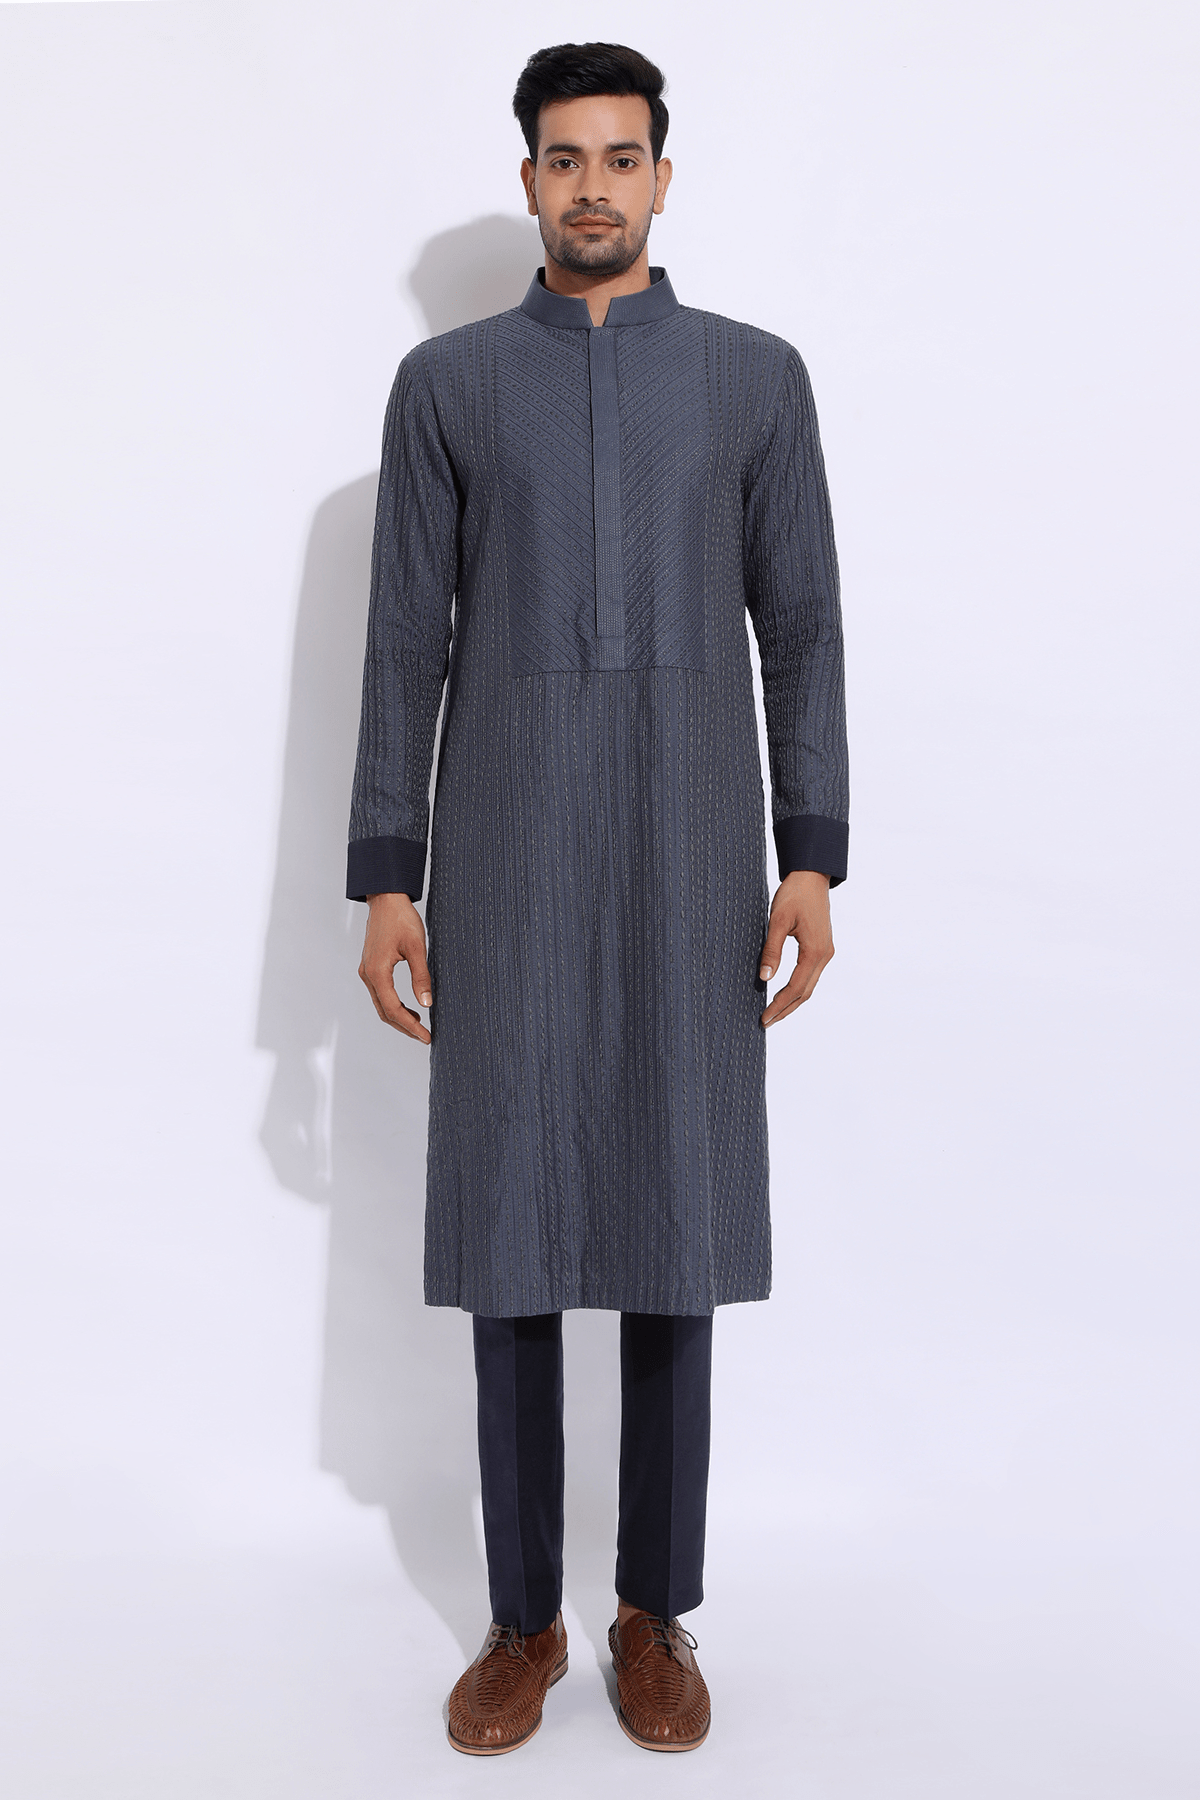 Grey with thread texture Kurta Set - Kunal Anil Tanna